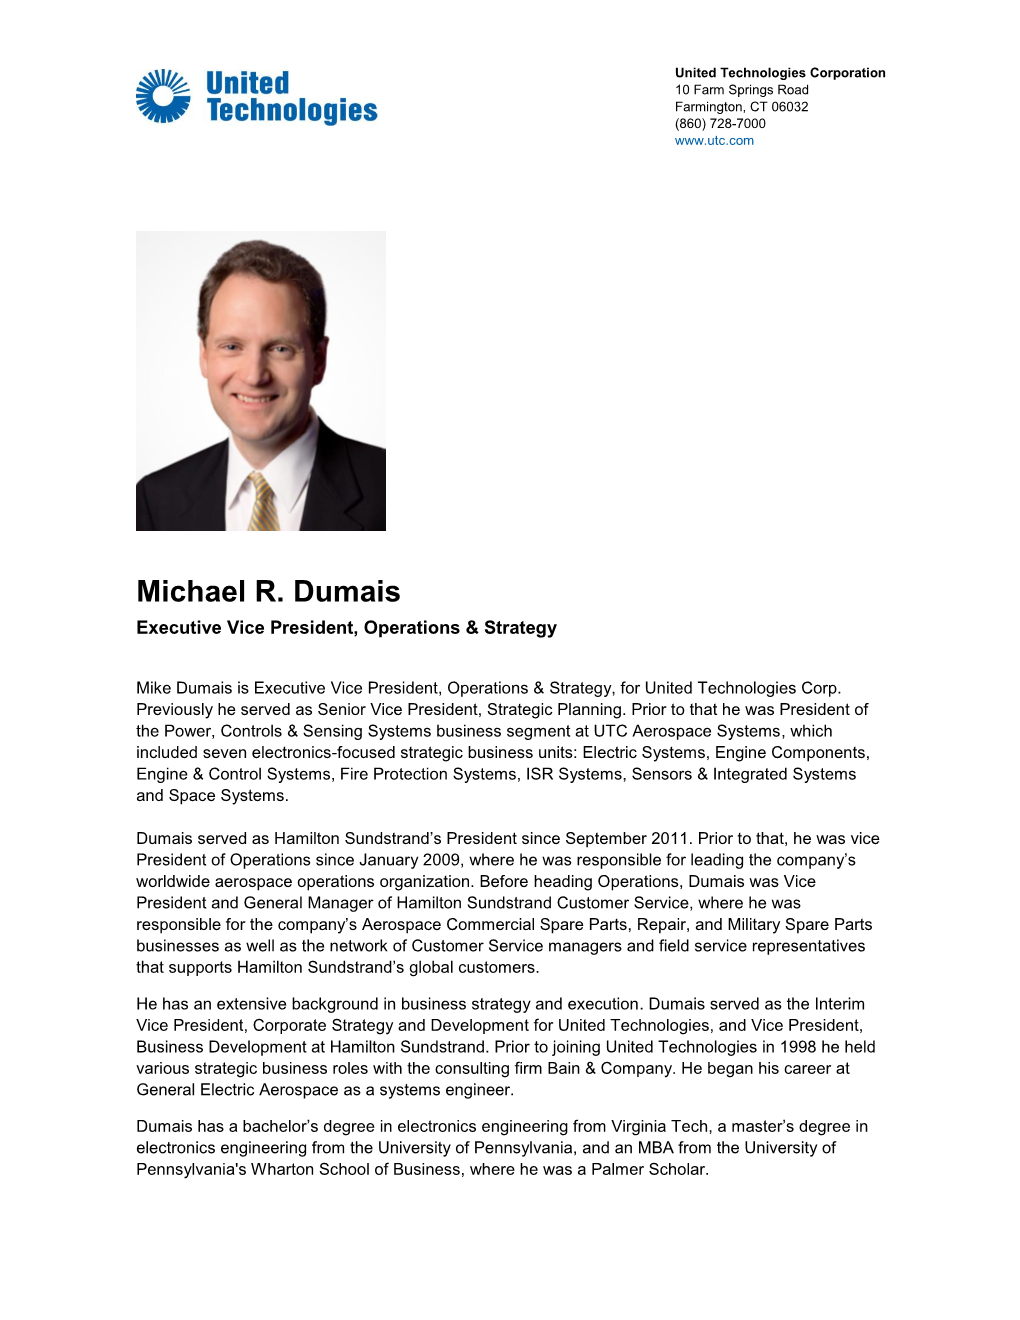 Michael R. Dumais Executive Vice President, Operations & Strategy